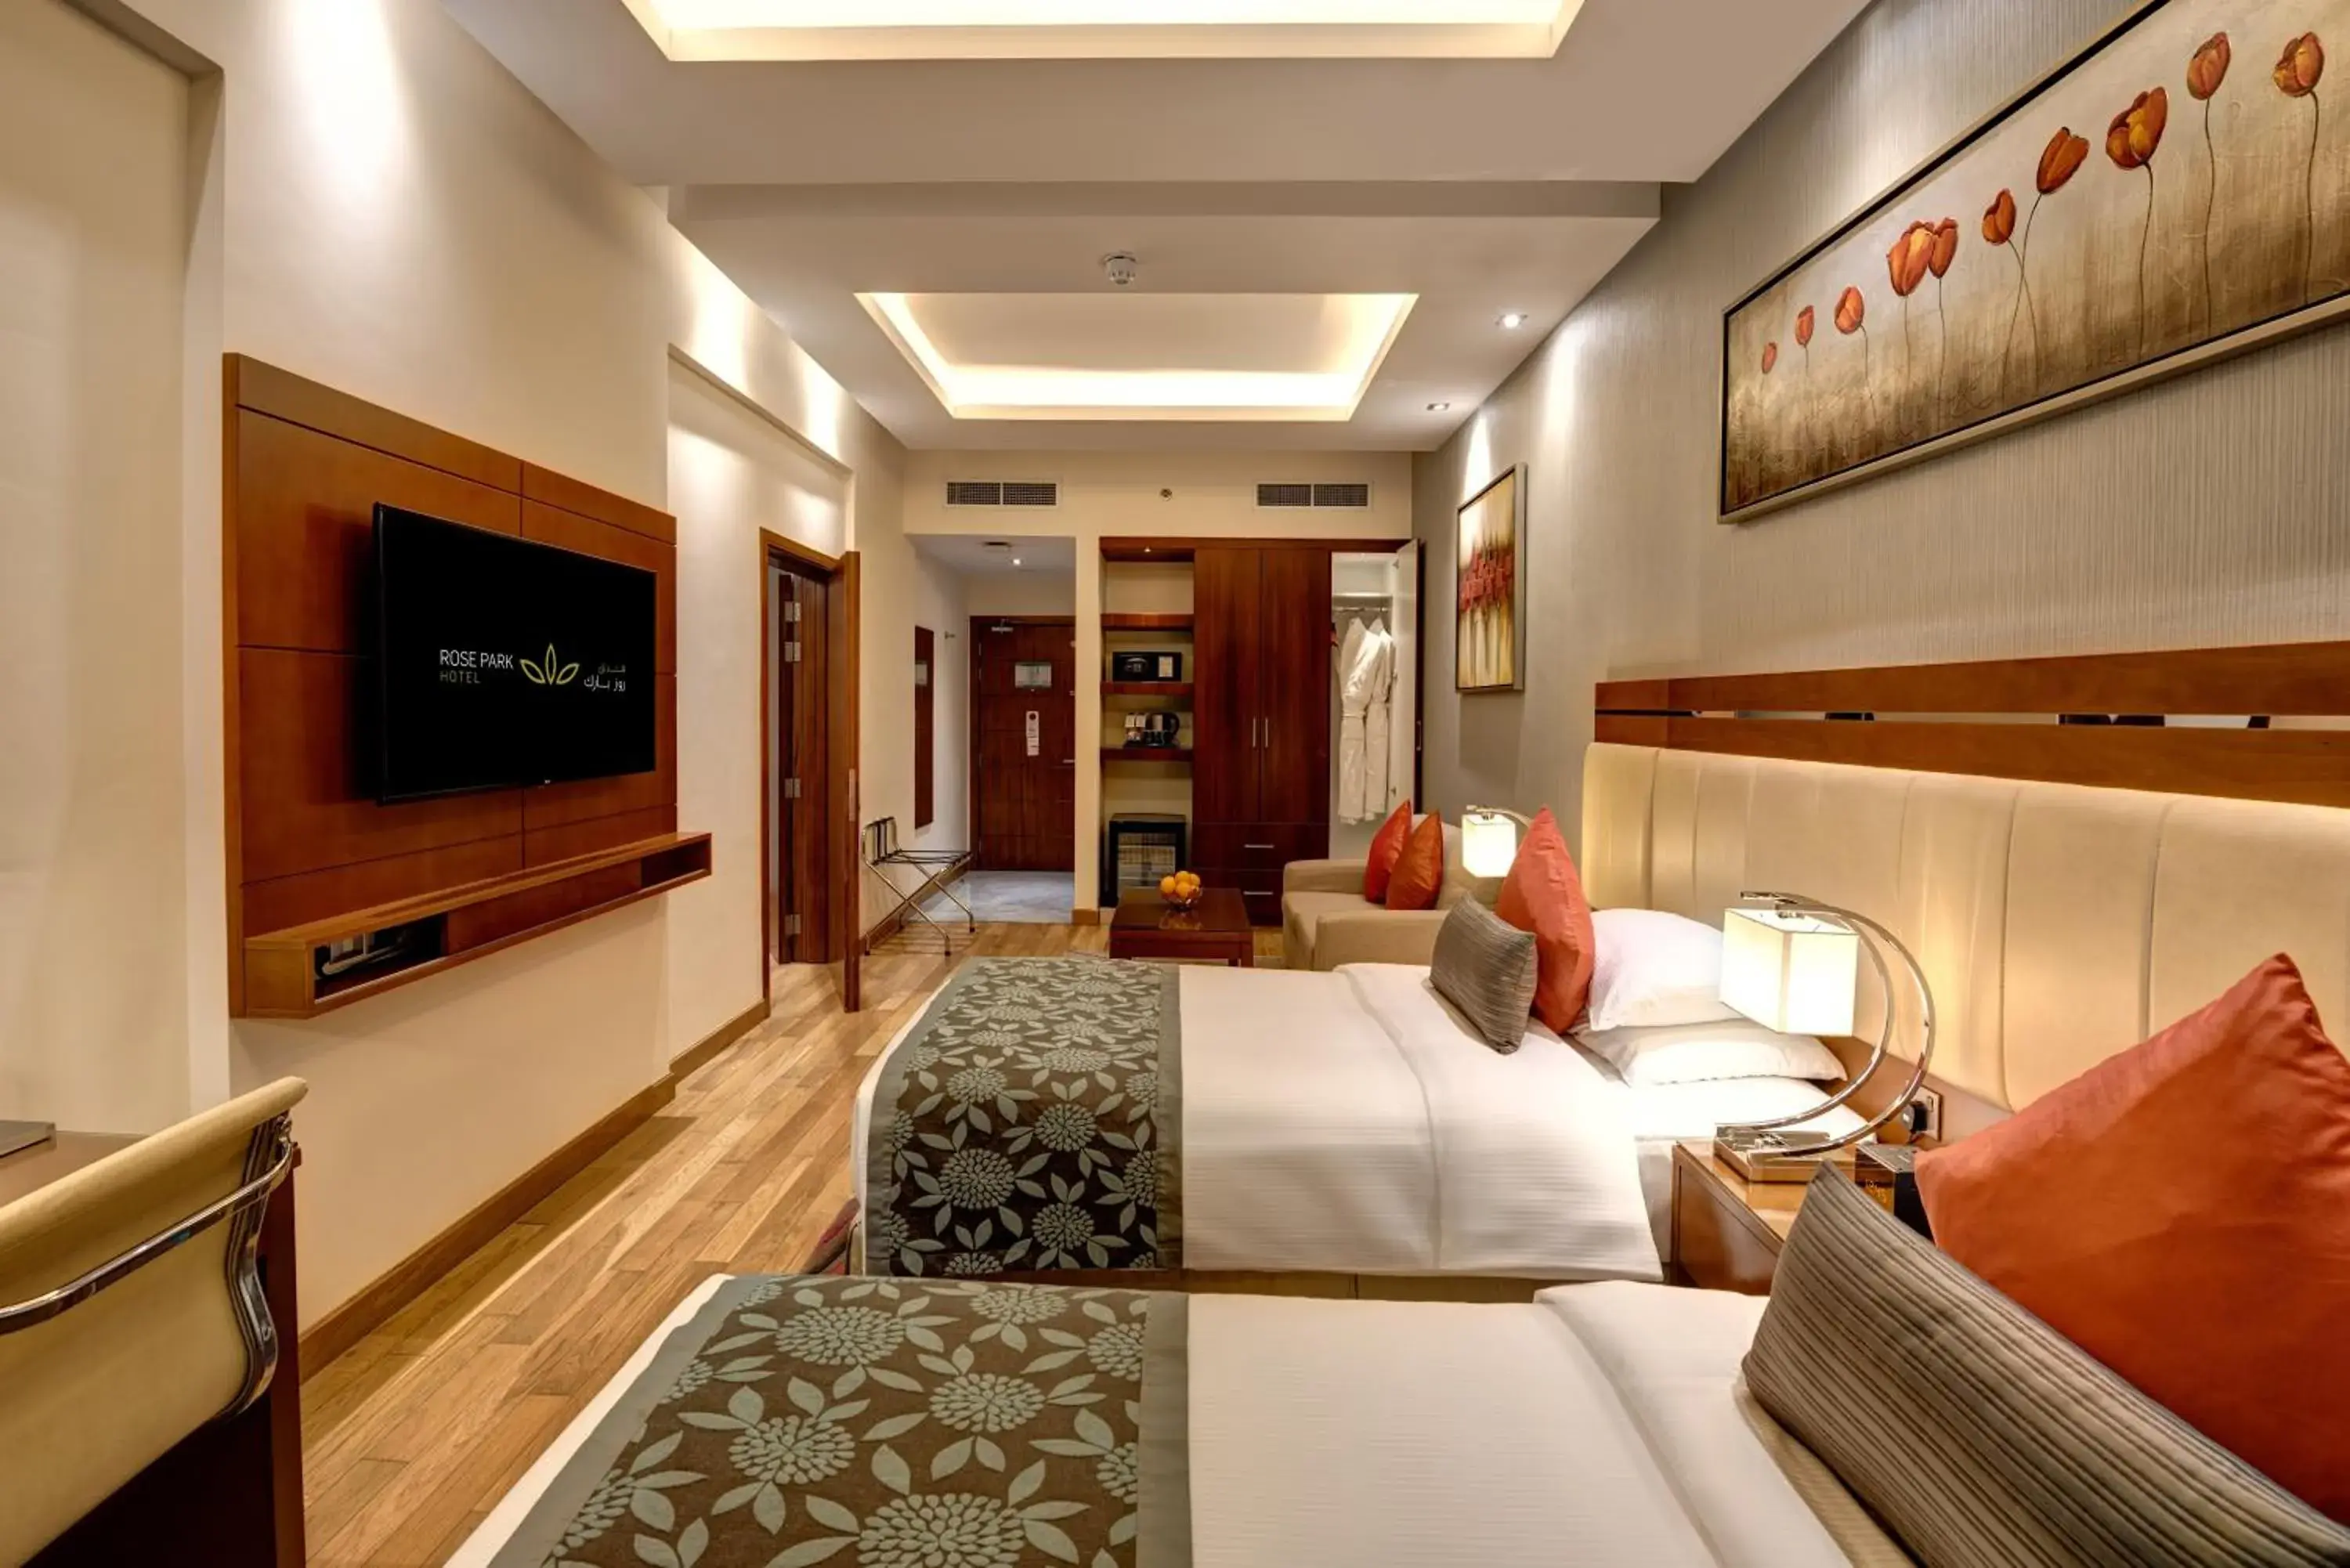 Bedroom in Rose Park Hotel - Al Barsha, Opposite Metro Station